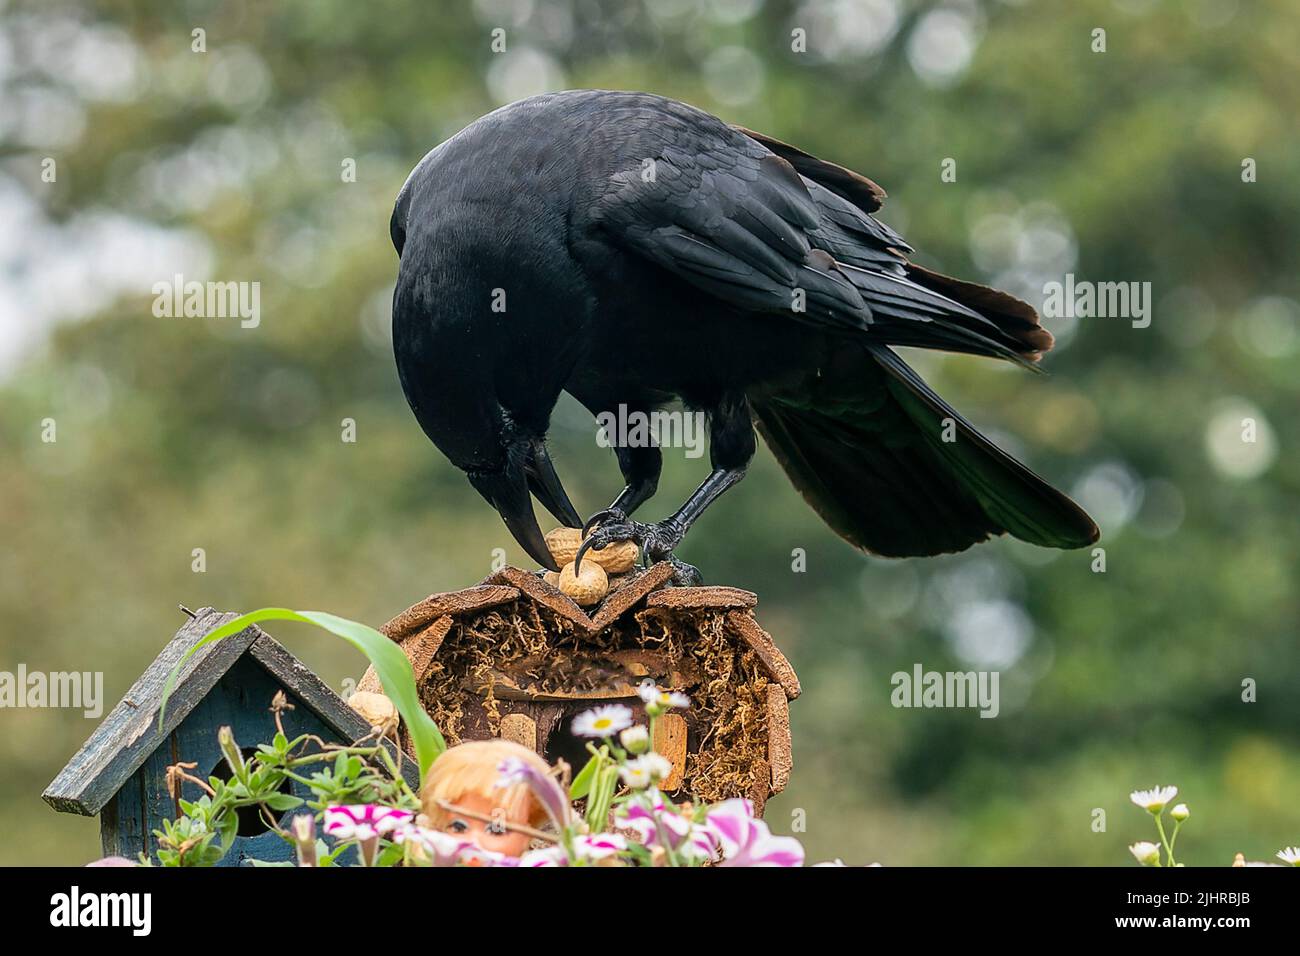 Large Black bird attacks a peanut Stock Photo